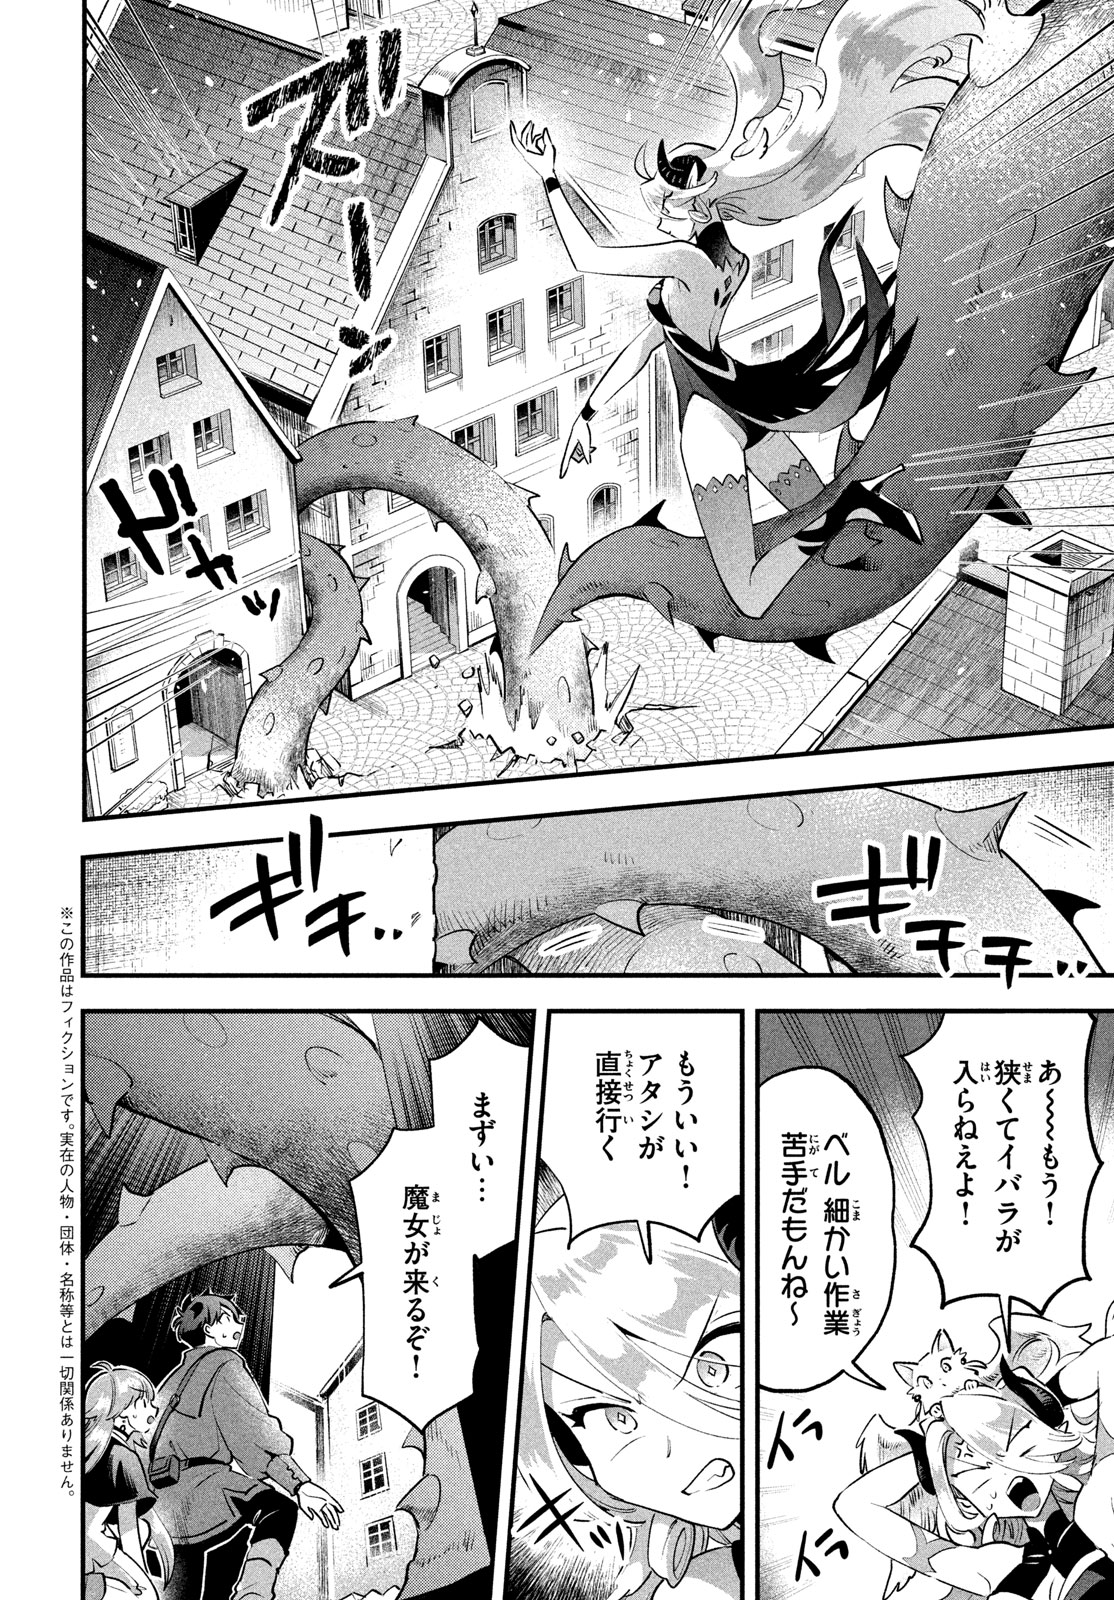 7-nin no Nemuri Hime - Chapter 44 - Page 2